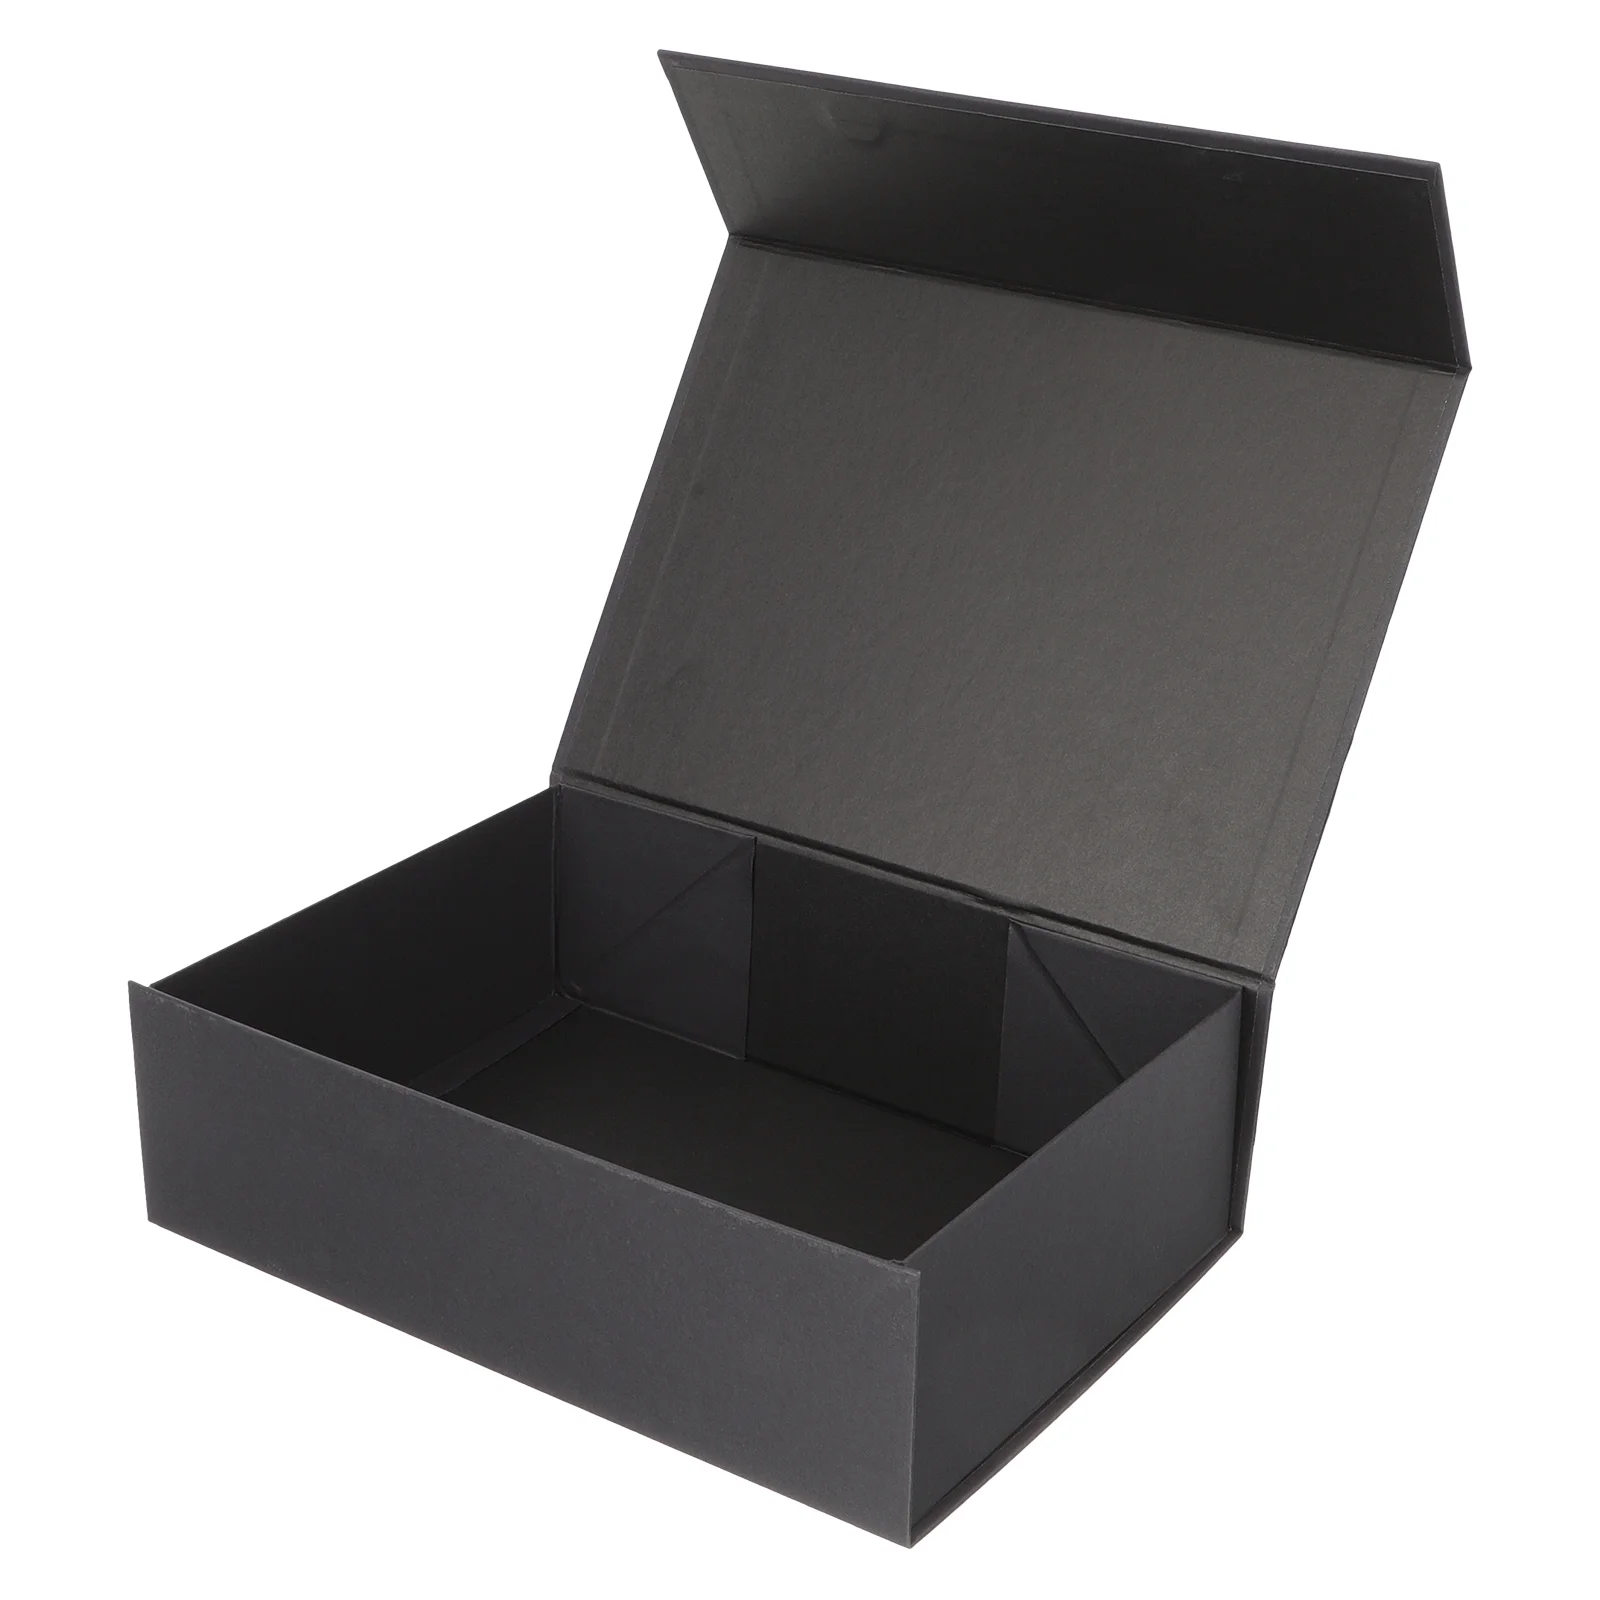 

Box Gift Boxes Packaging Gifts Lid Cardboard Bridesmaid Closure Folding Presents Decorative Black Keepsake Proposal Christmas